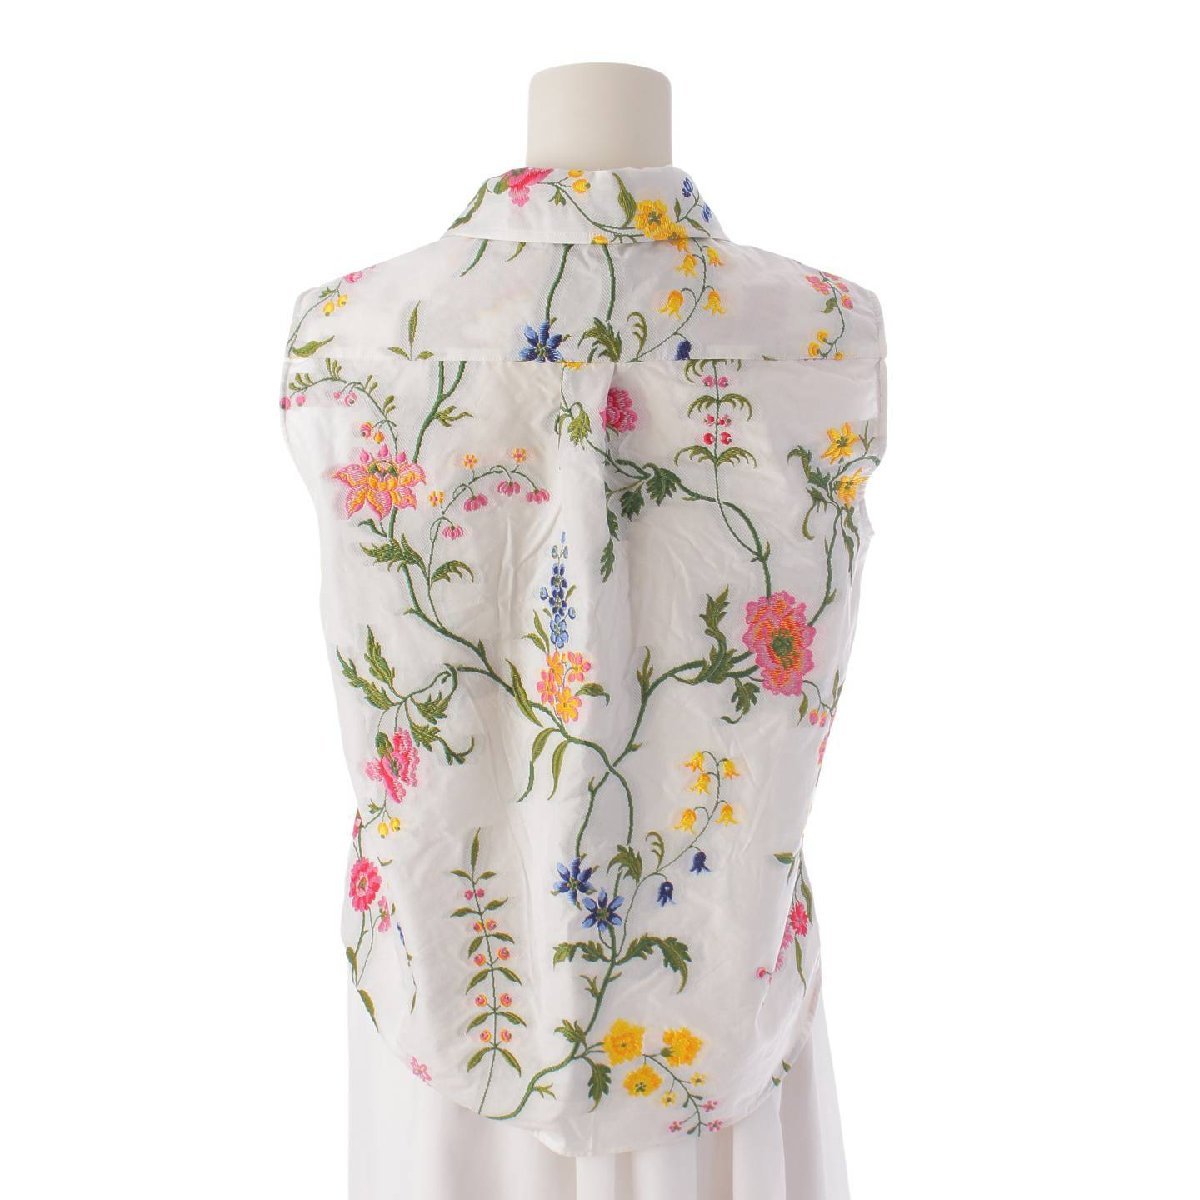 [ Christian Dior ]Christian Dior 23SS Petites Fleurs no sleeve floral print blouse shirt white 36 [ used ]199887